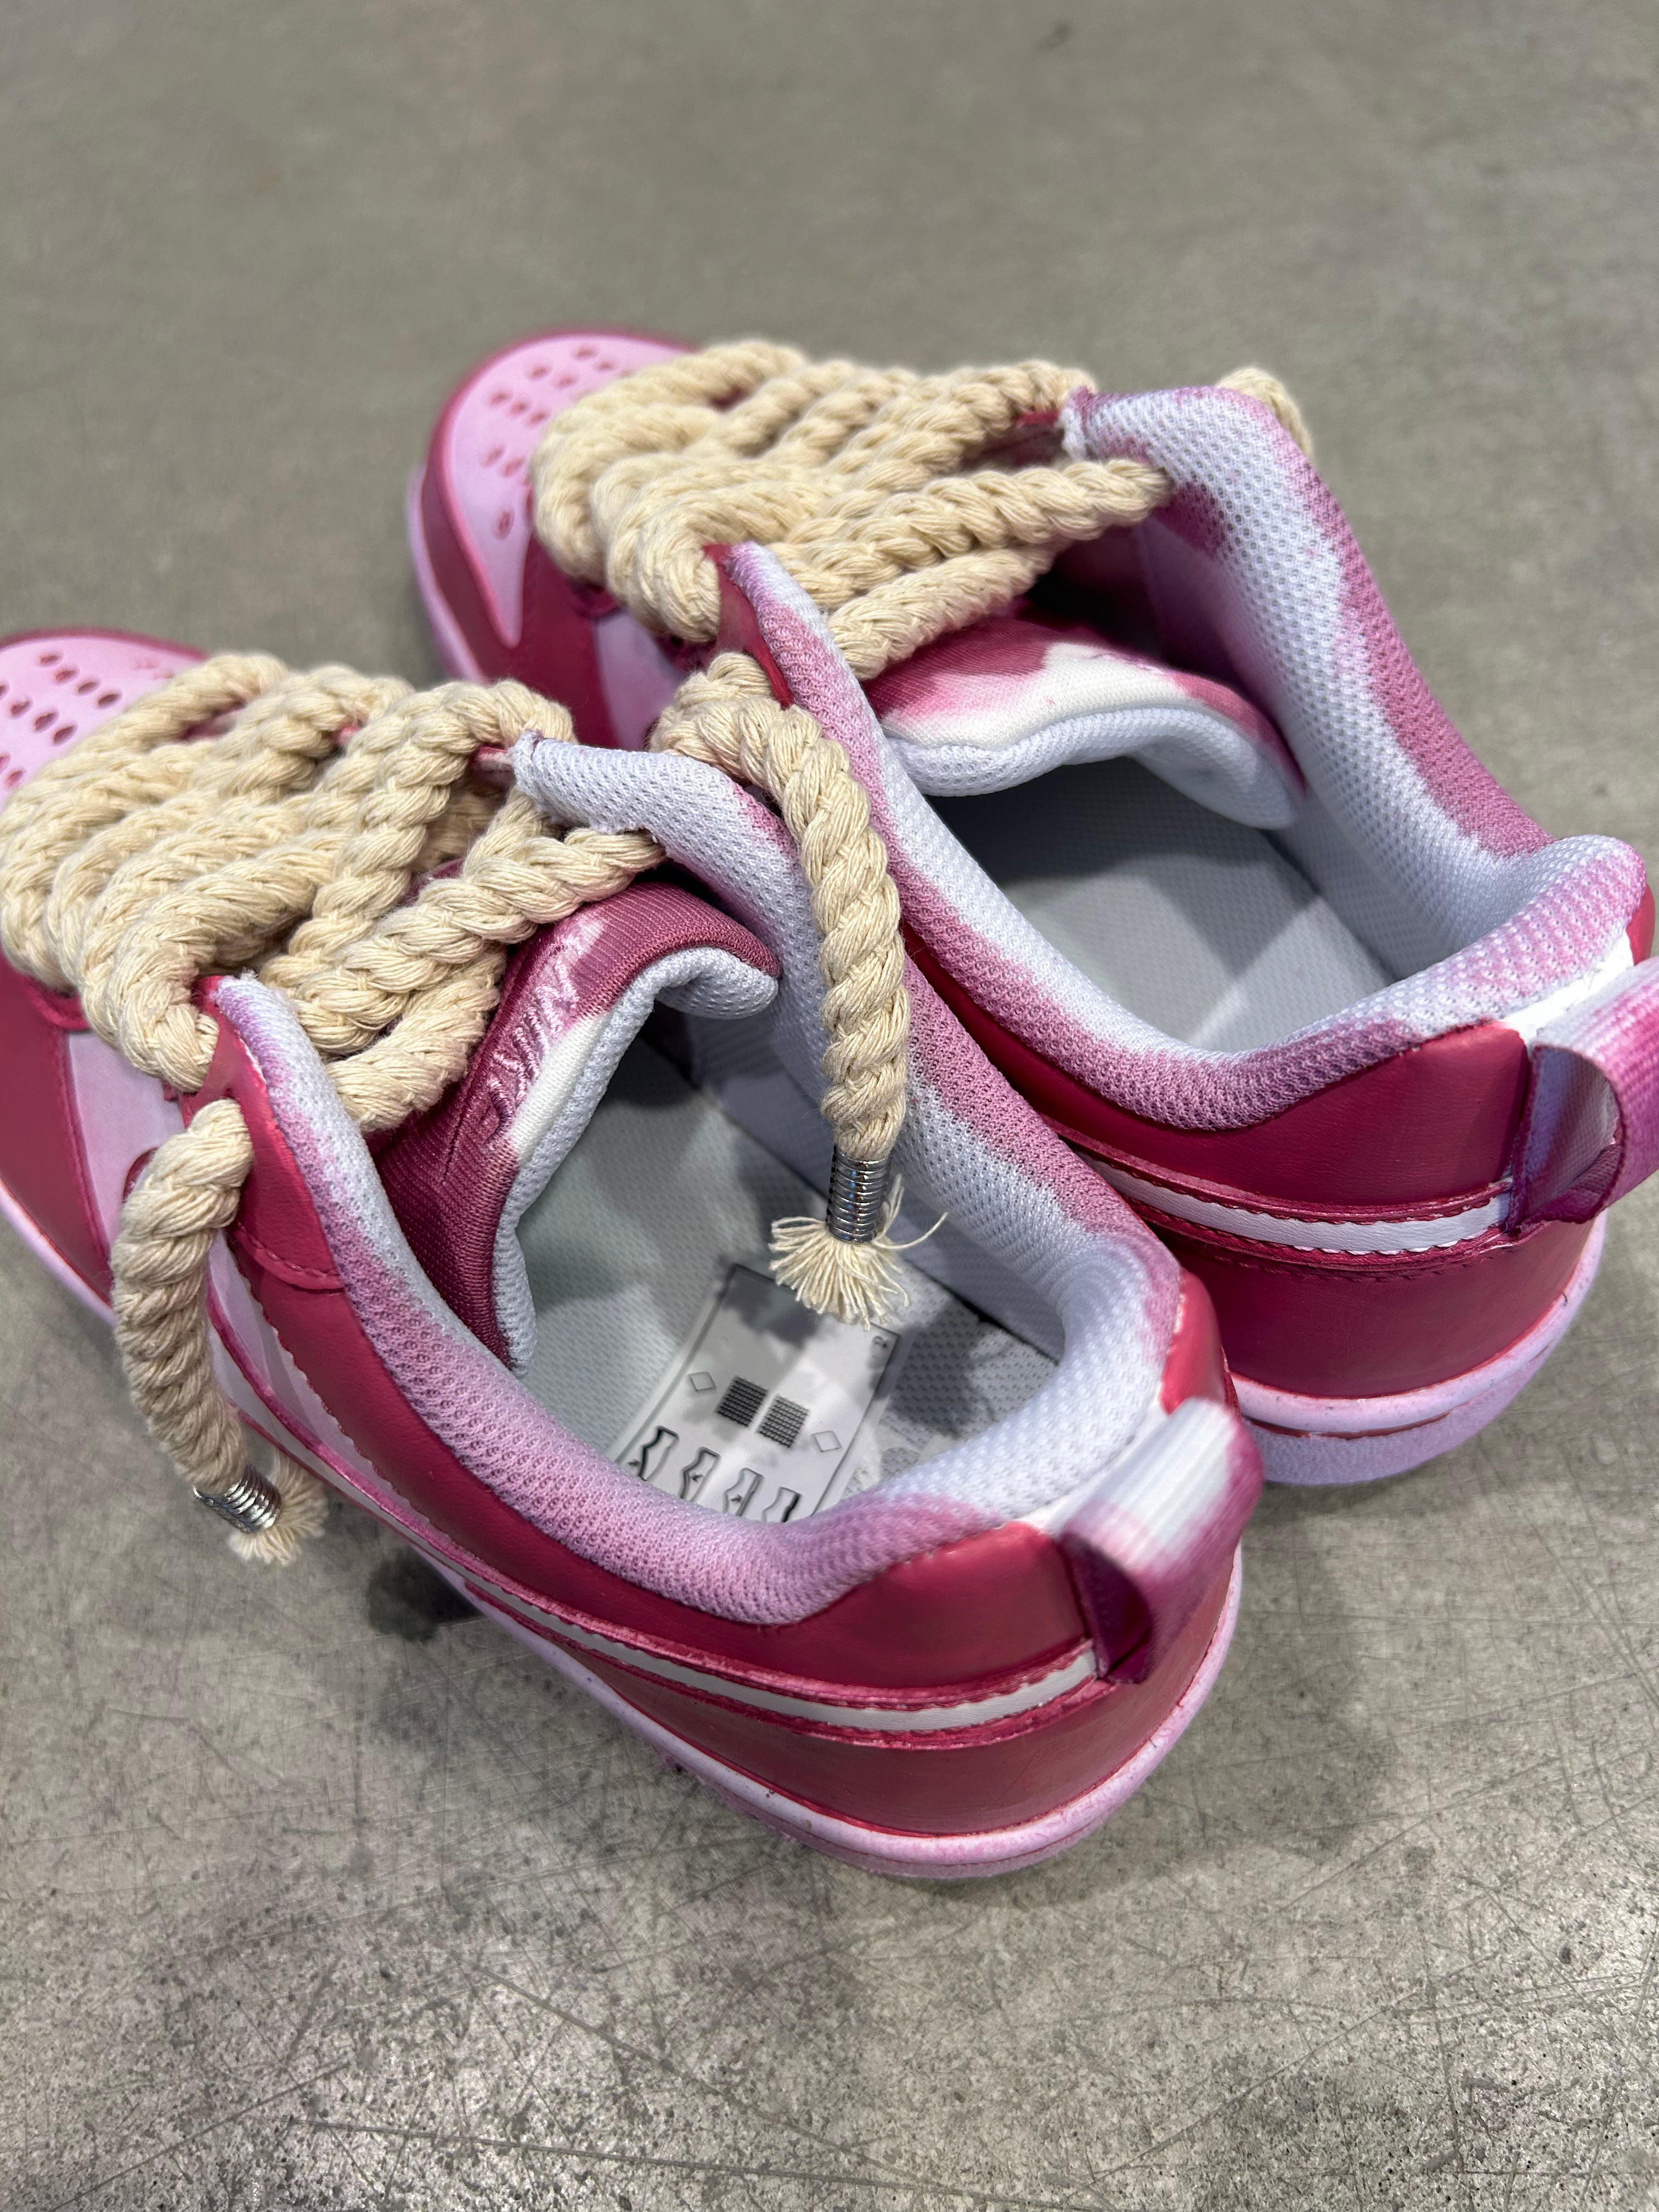 Schuhe Nike Limit Edition pink